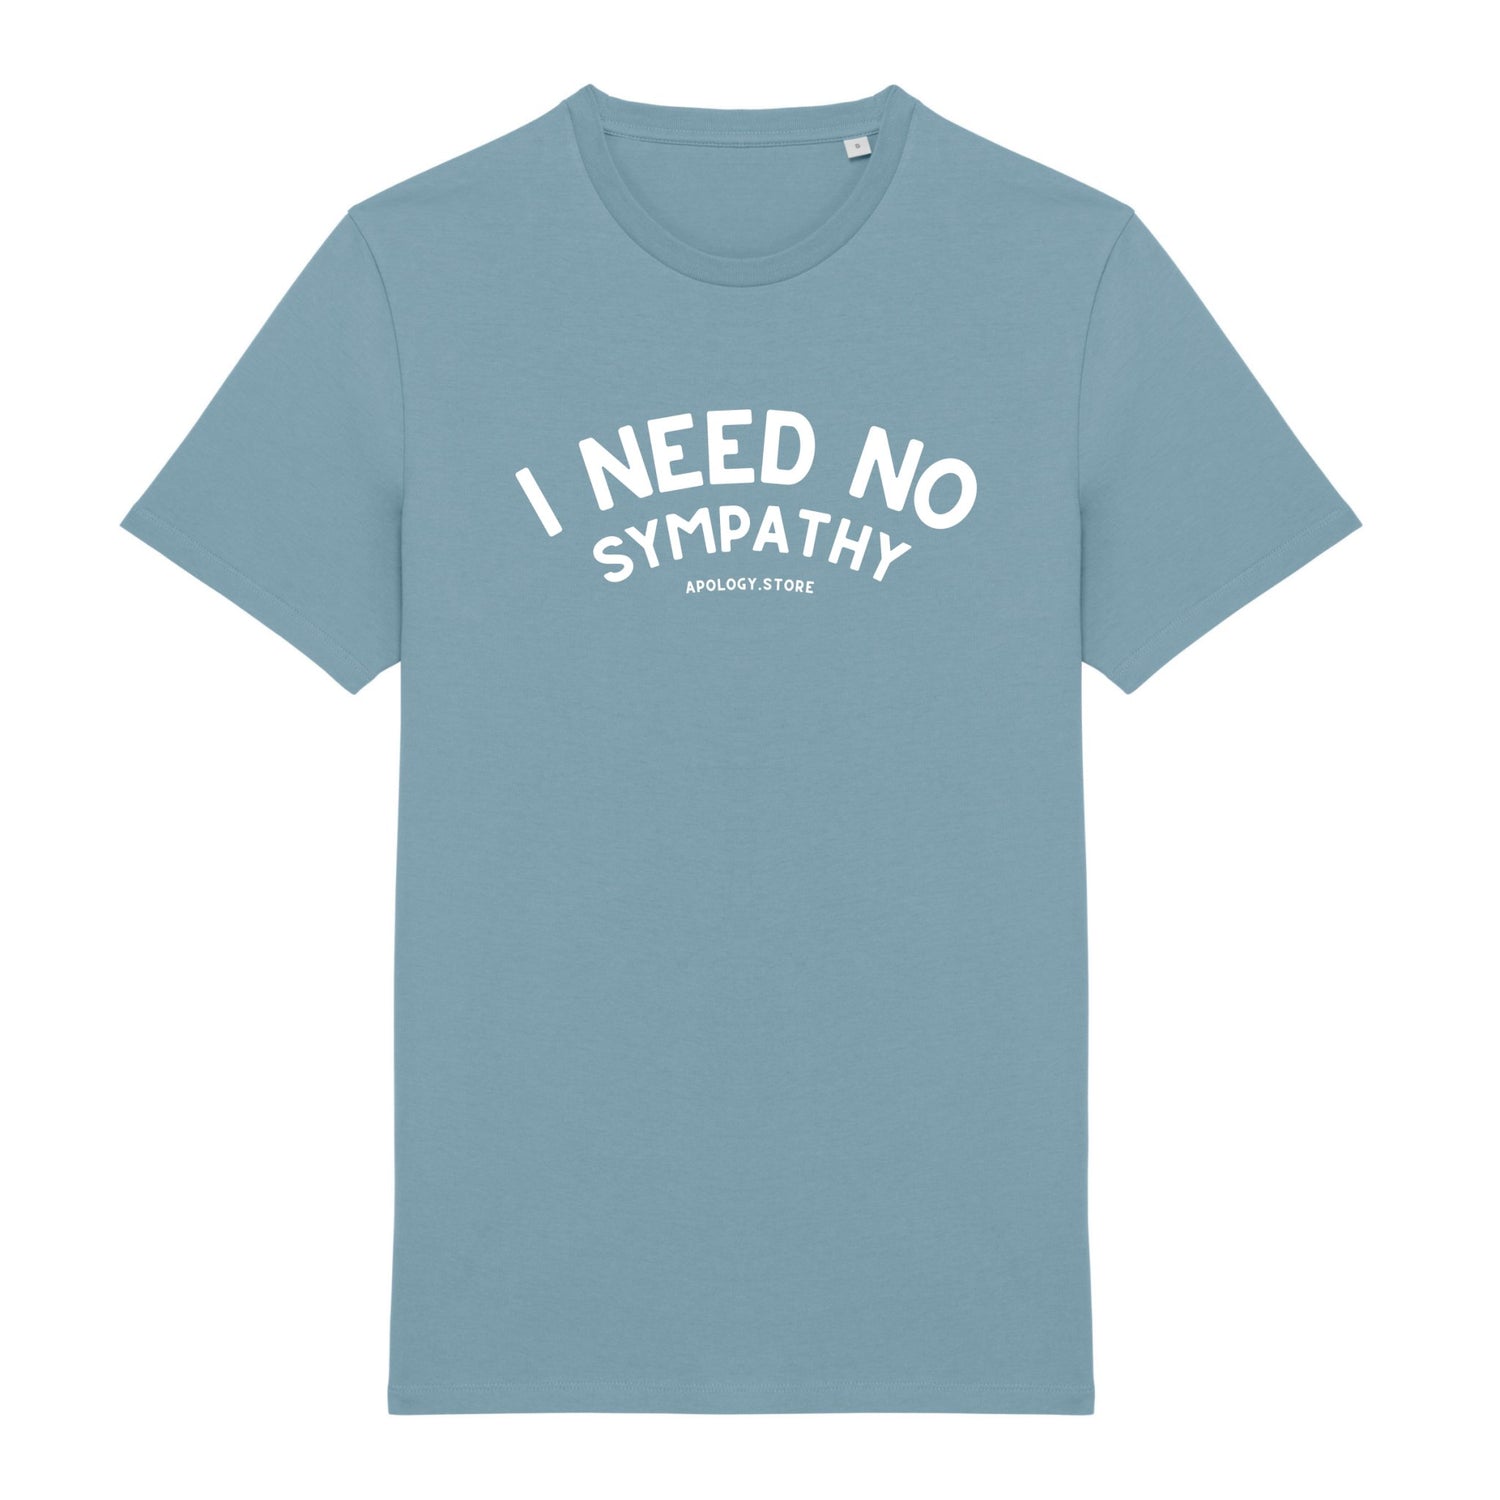 T-shirt I Need No Sympathy - Fabriqué au Portugal XS Bleu_arctique - Imprimé en France